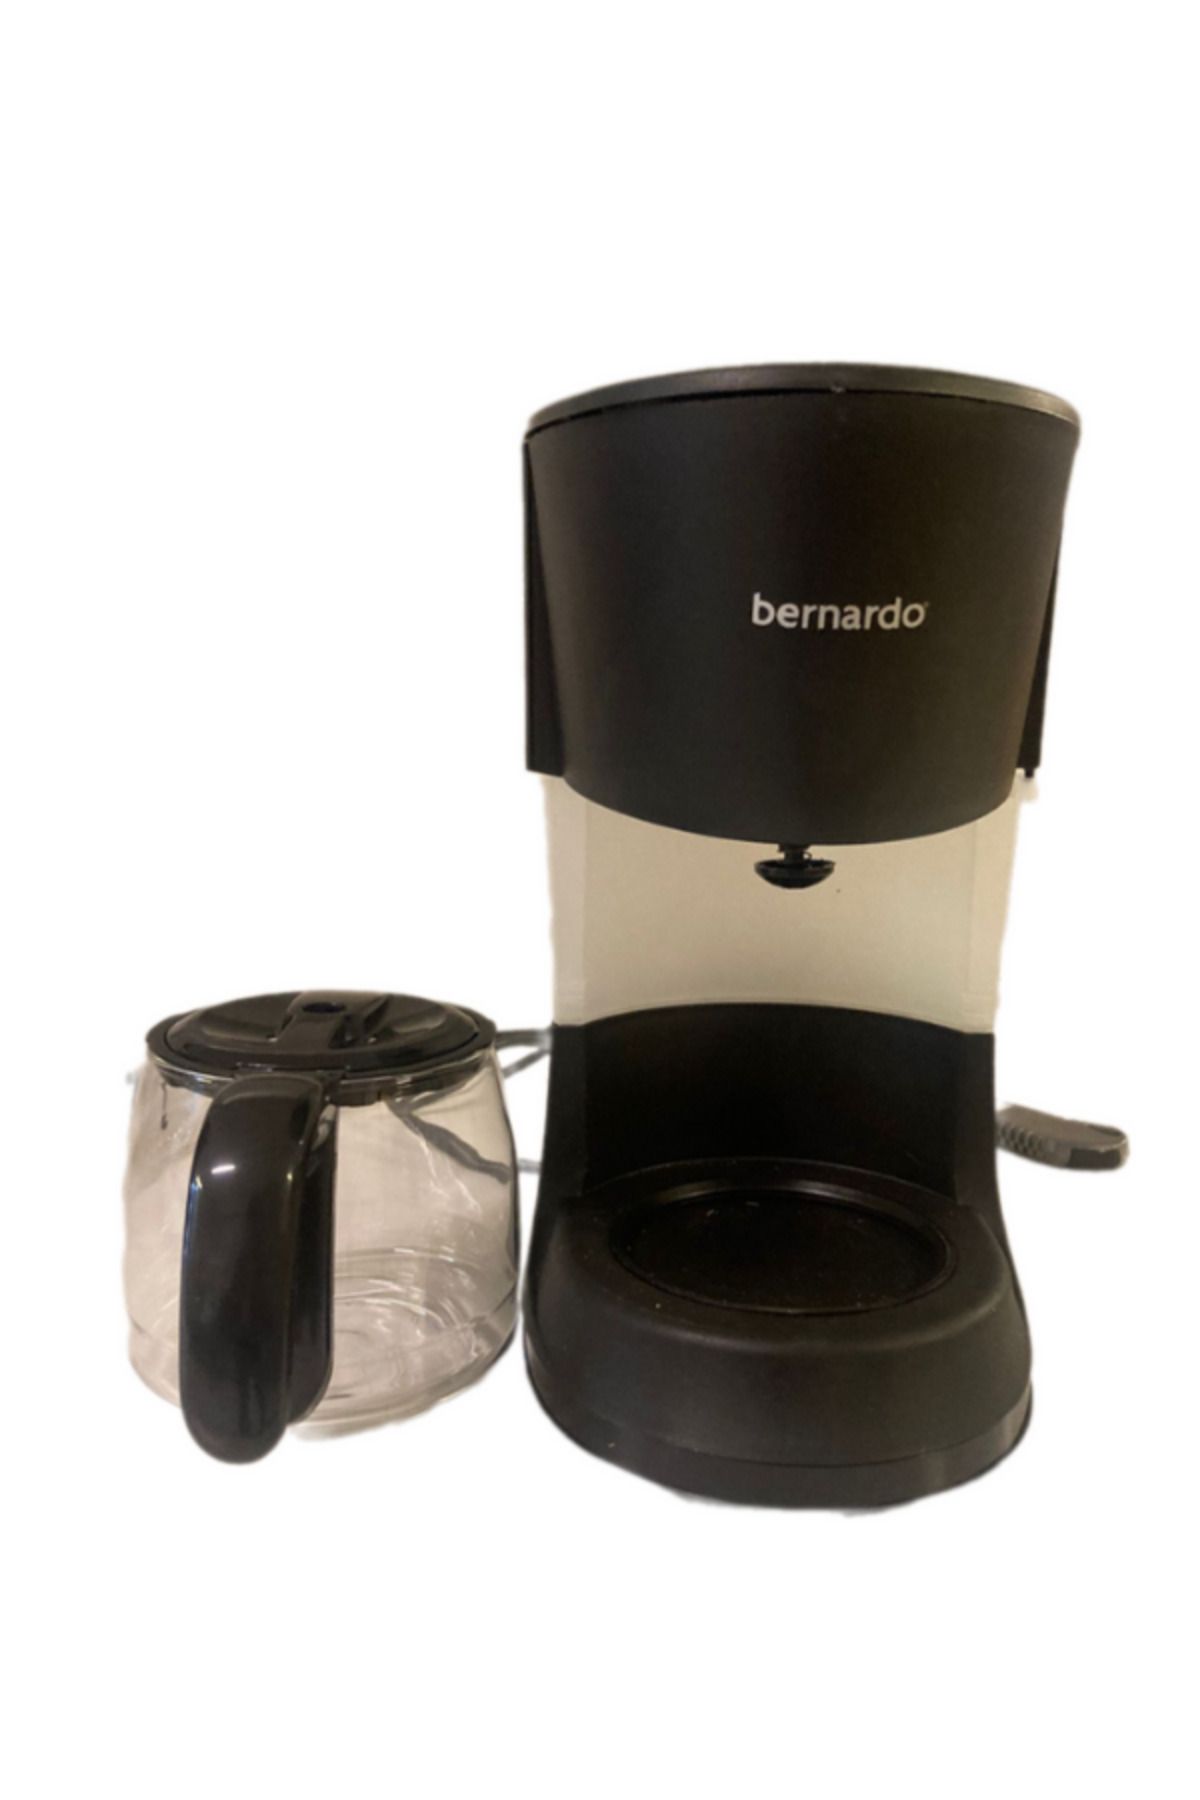 Bernardo Filtre Kahve Makinesi